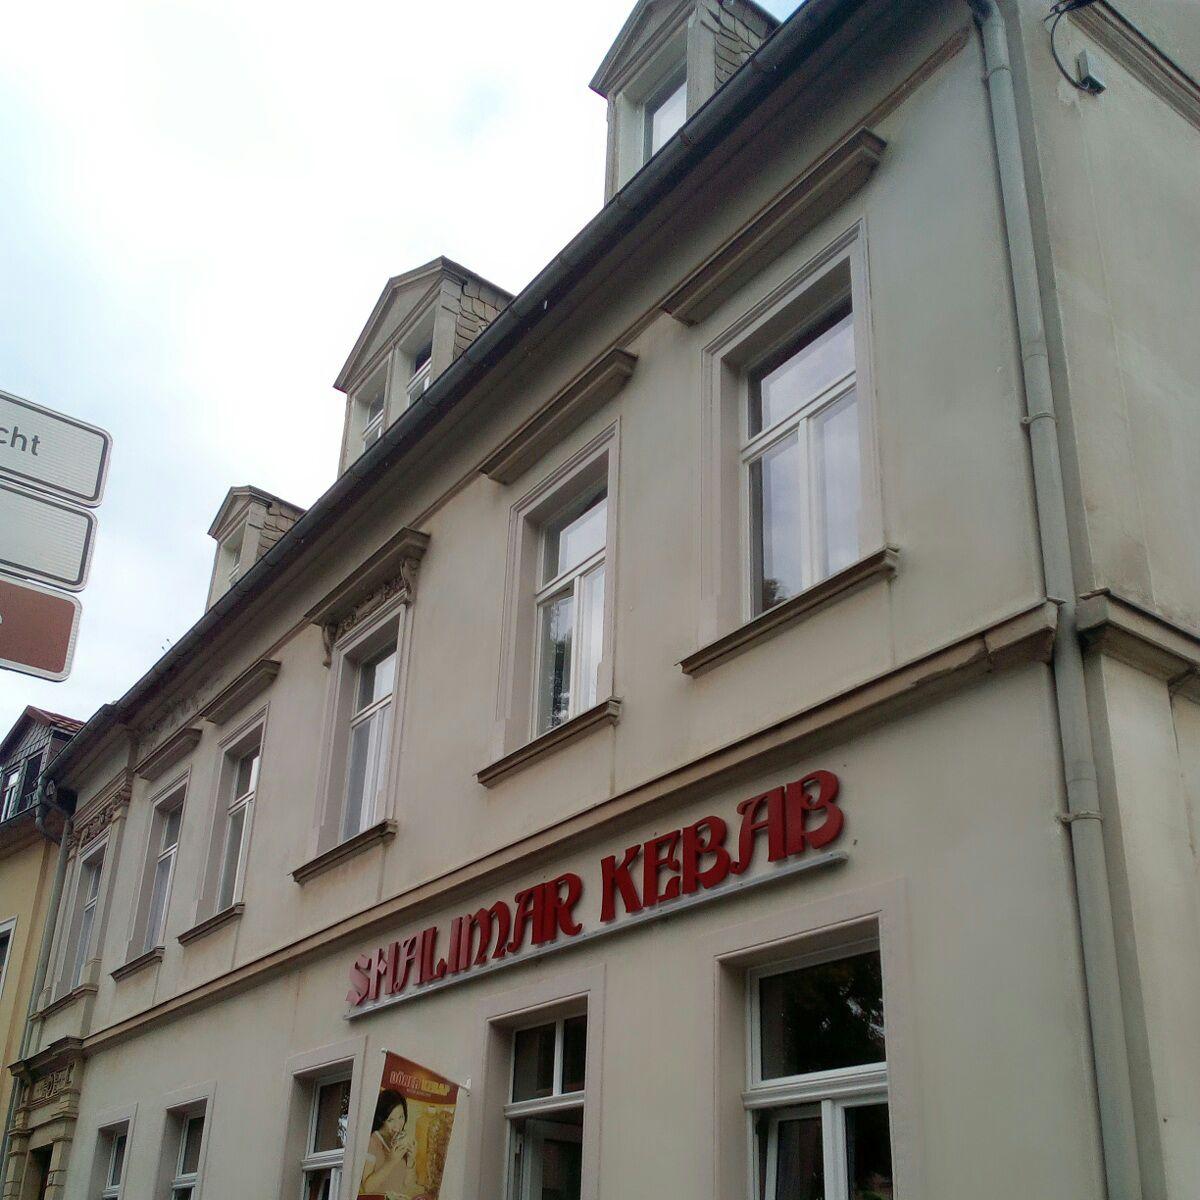 Restaurant "Miners Pub" in  Freiberg